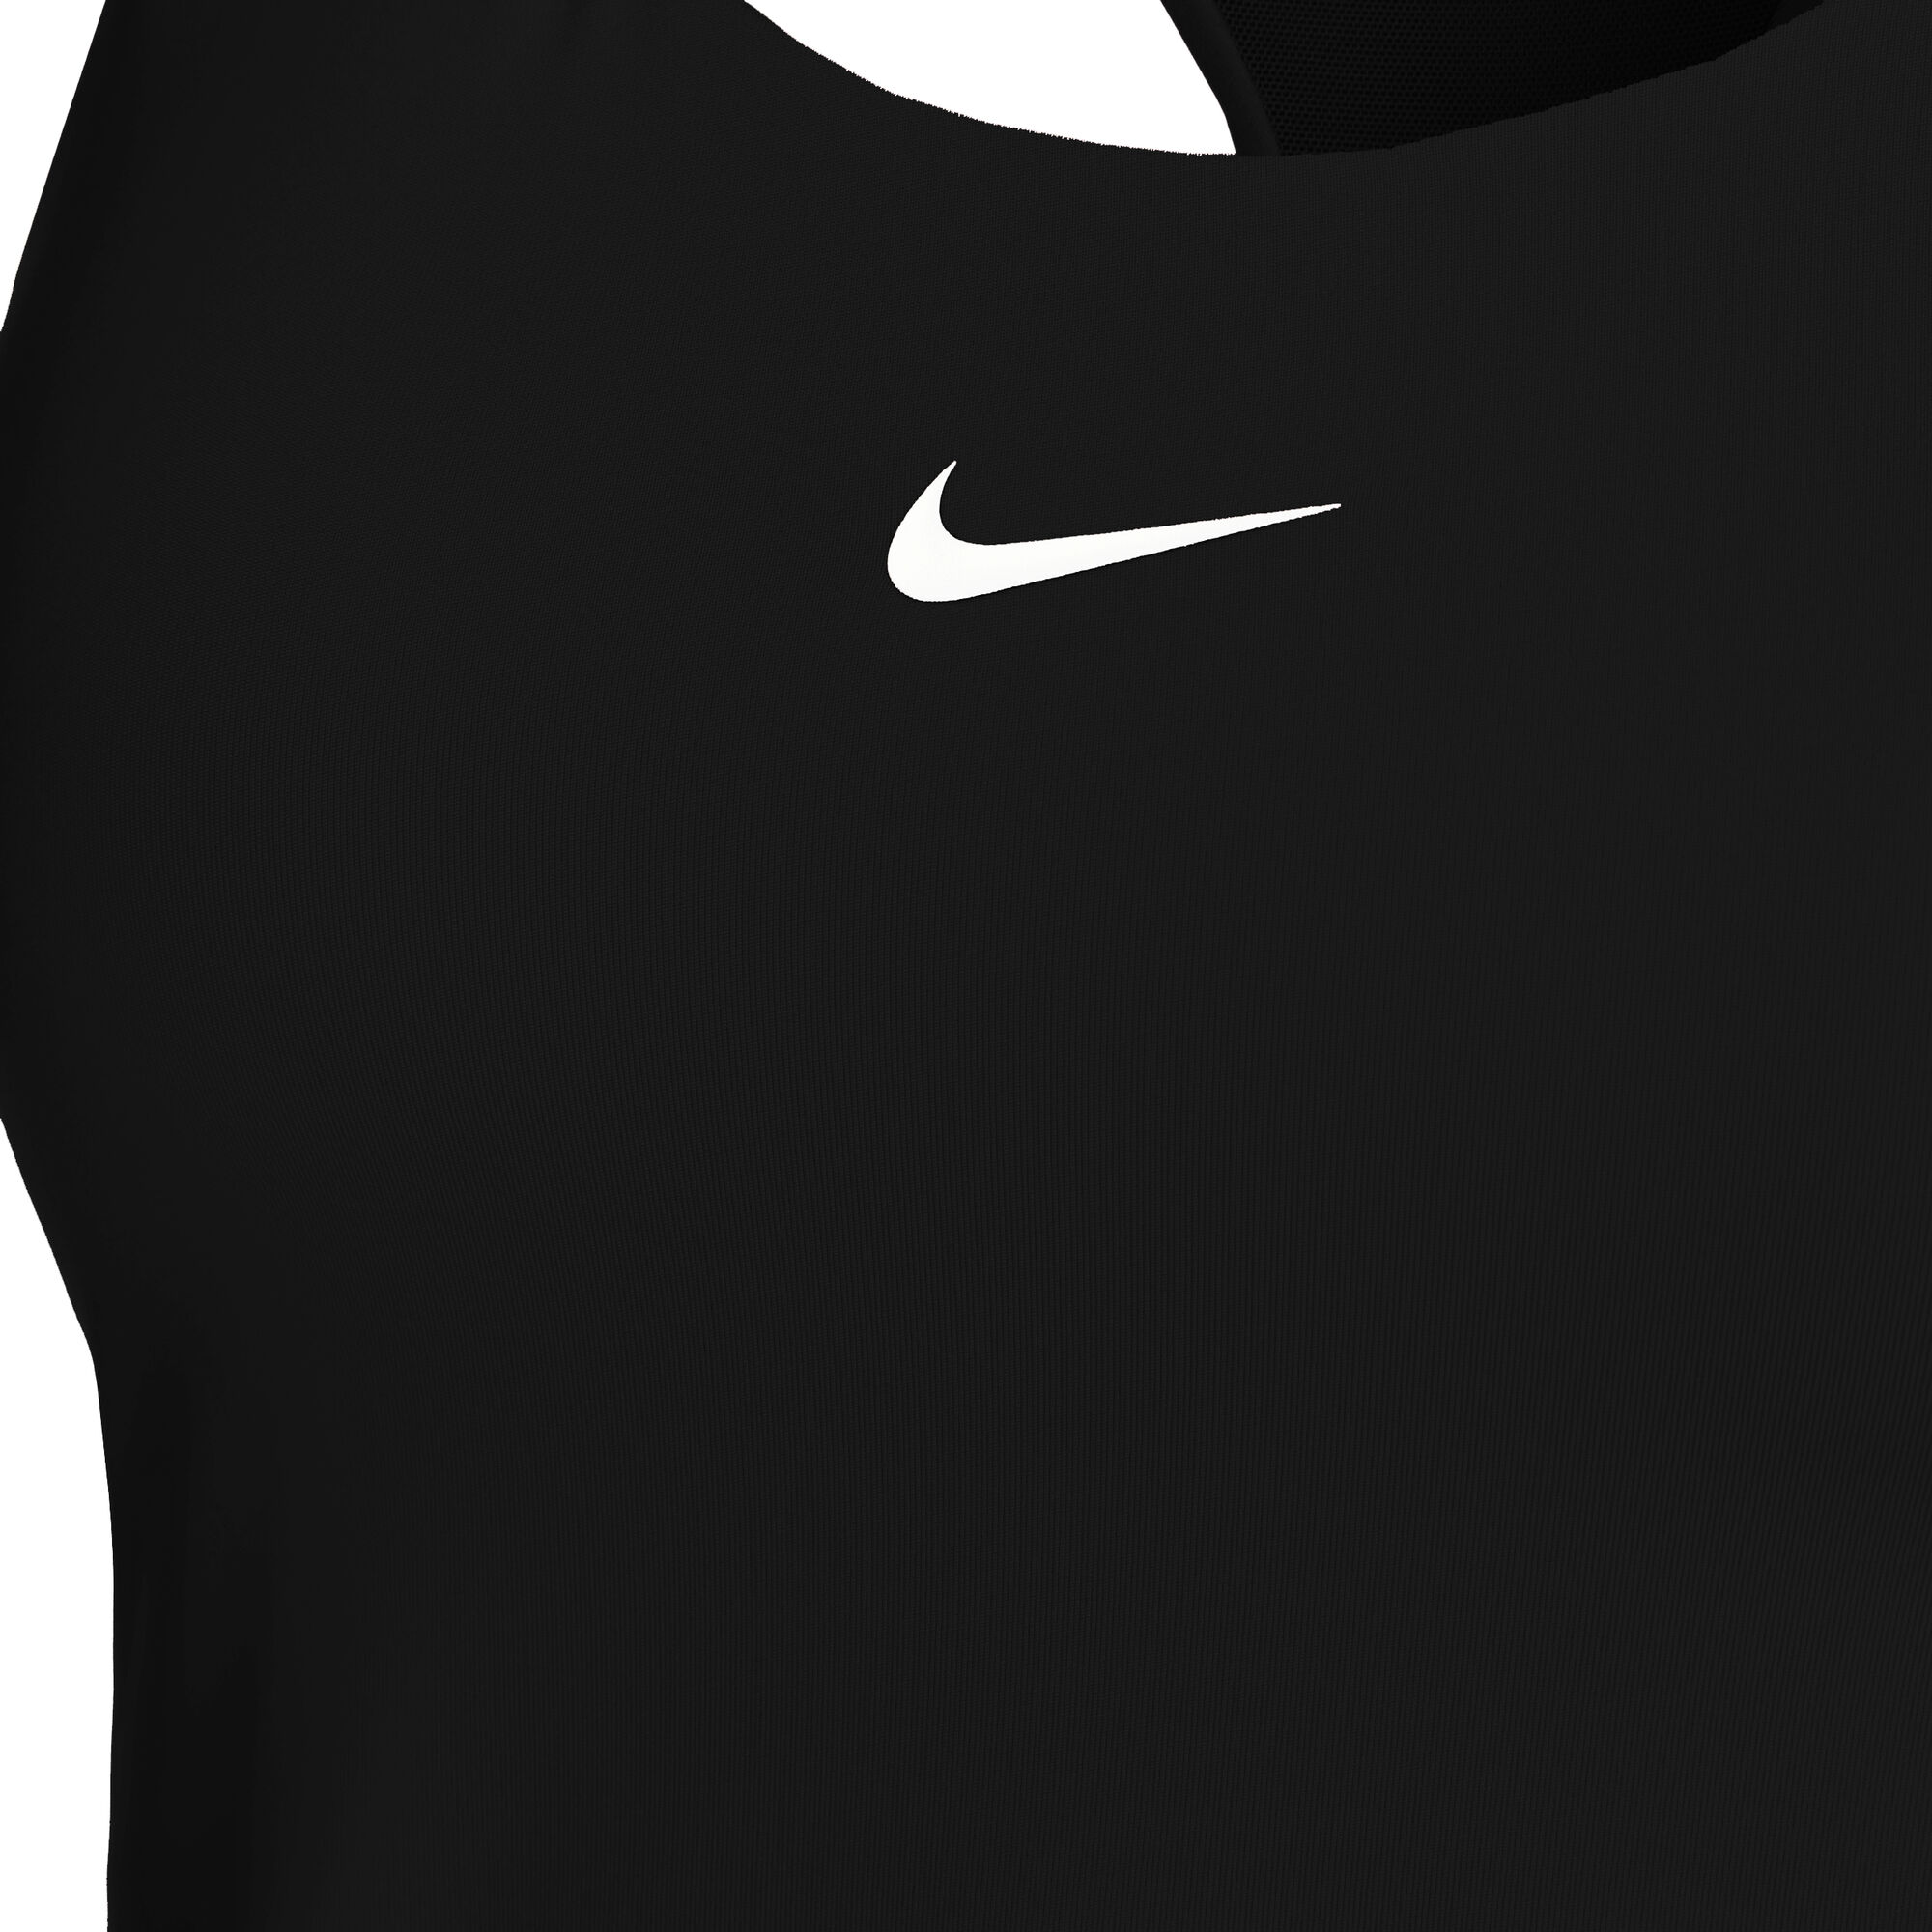 Buy Nike Dri-Fit Swoosh Bra Tank Top Women Black online